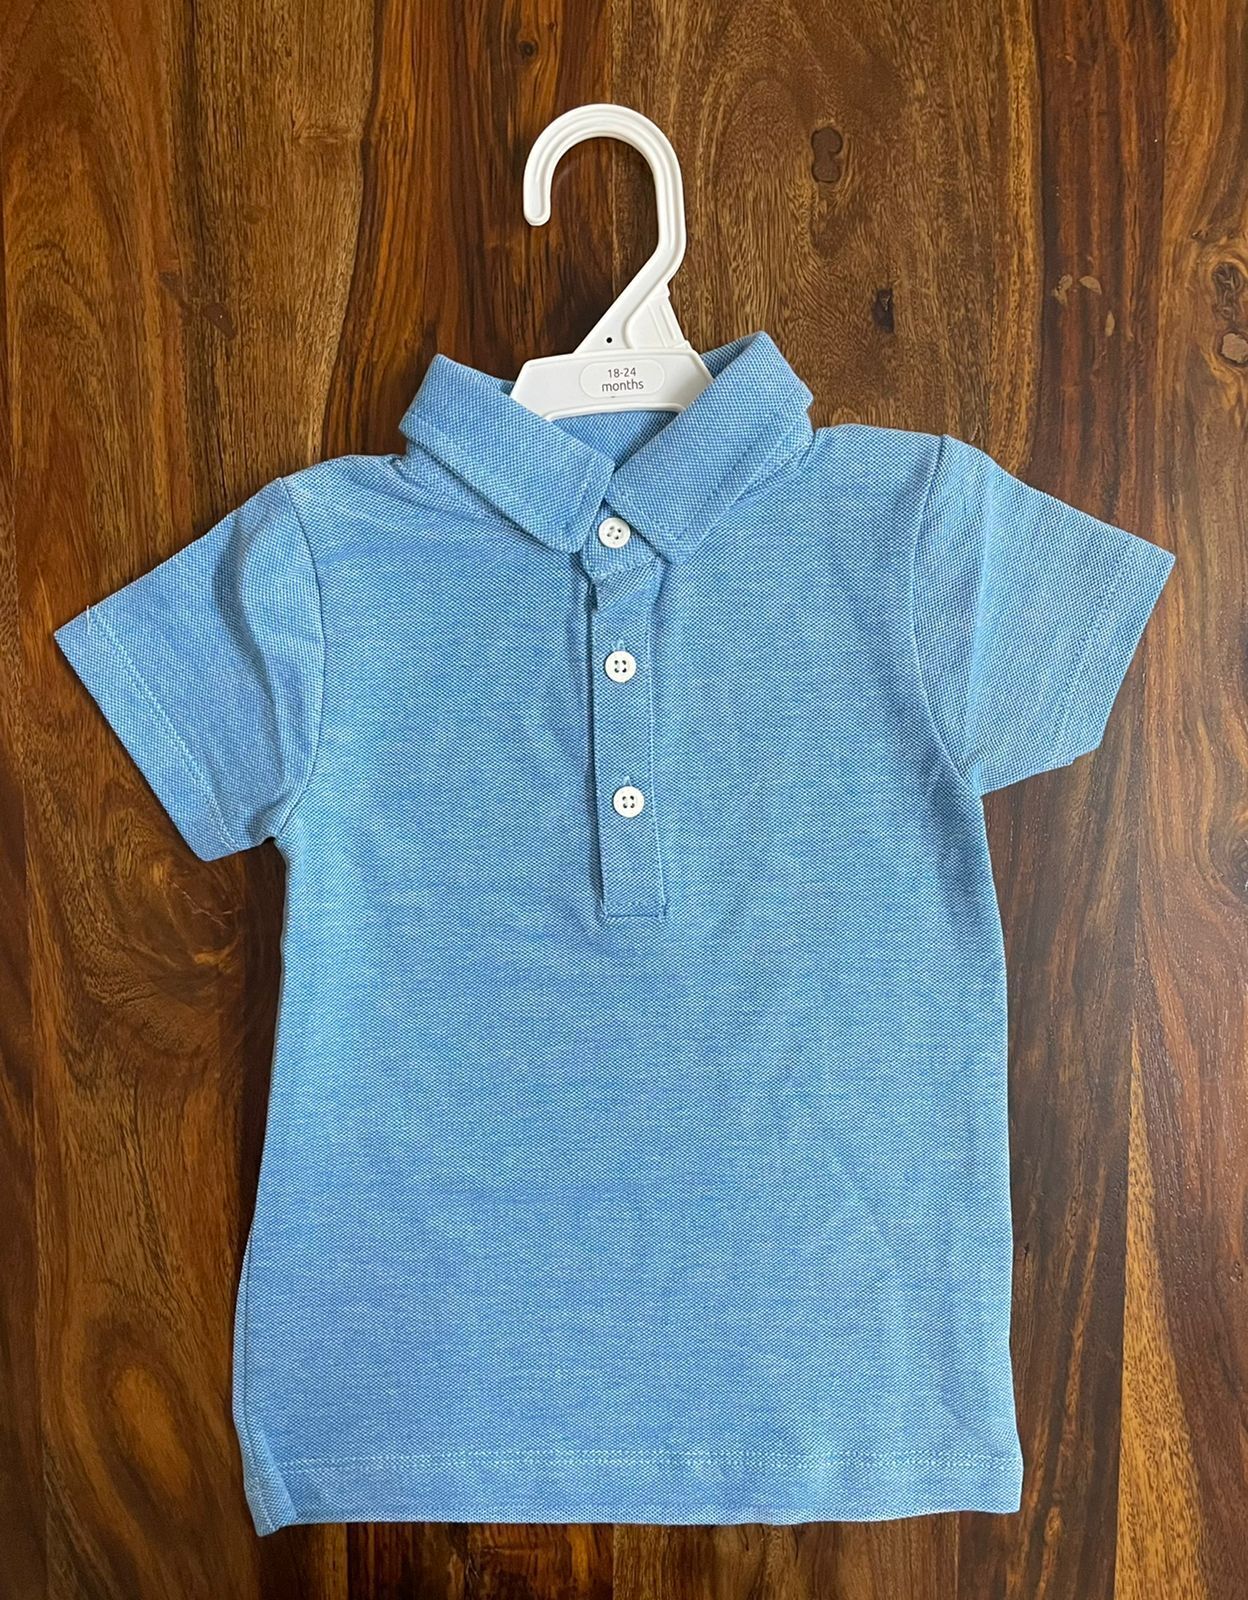 BabyNeeds Daily Wear Plain Collar Cotton T-Shirts Unisex AQUA BLUE COLOR